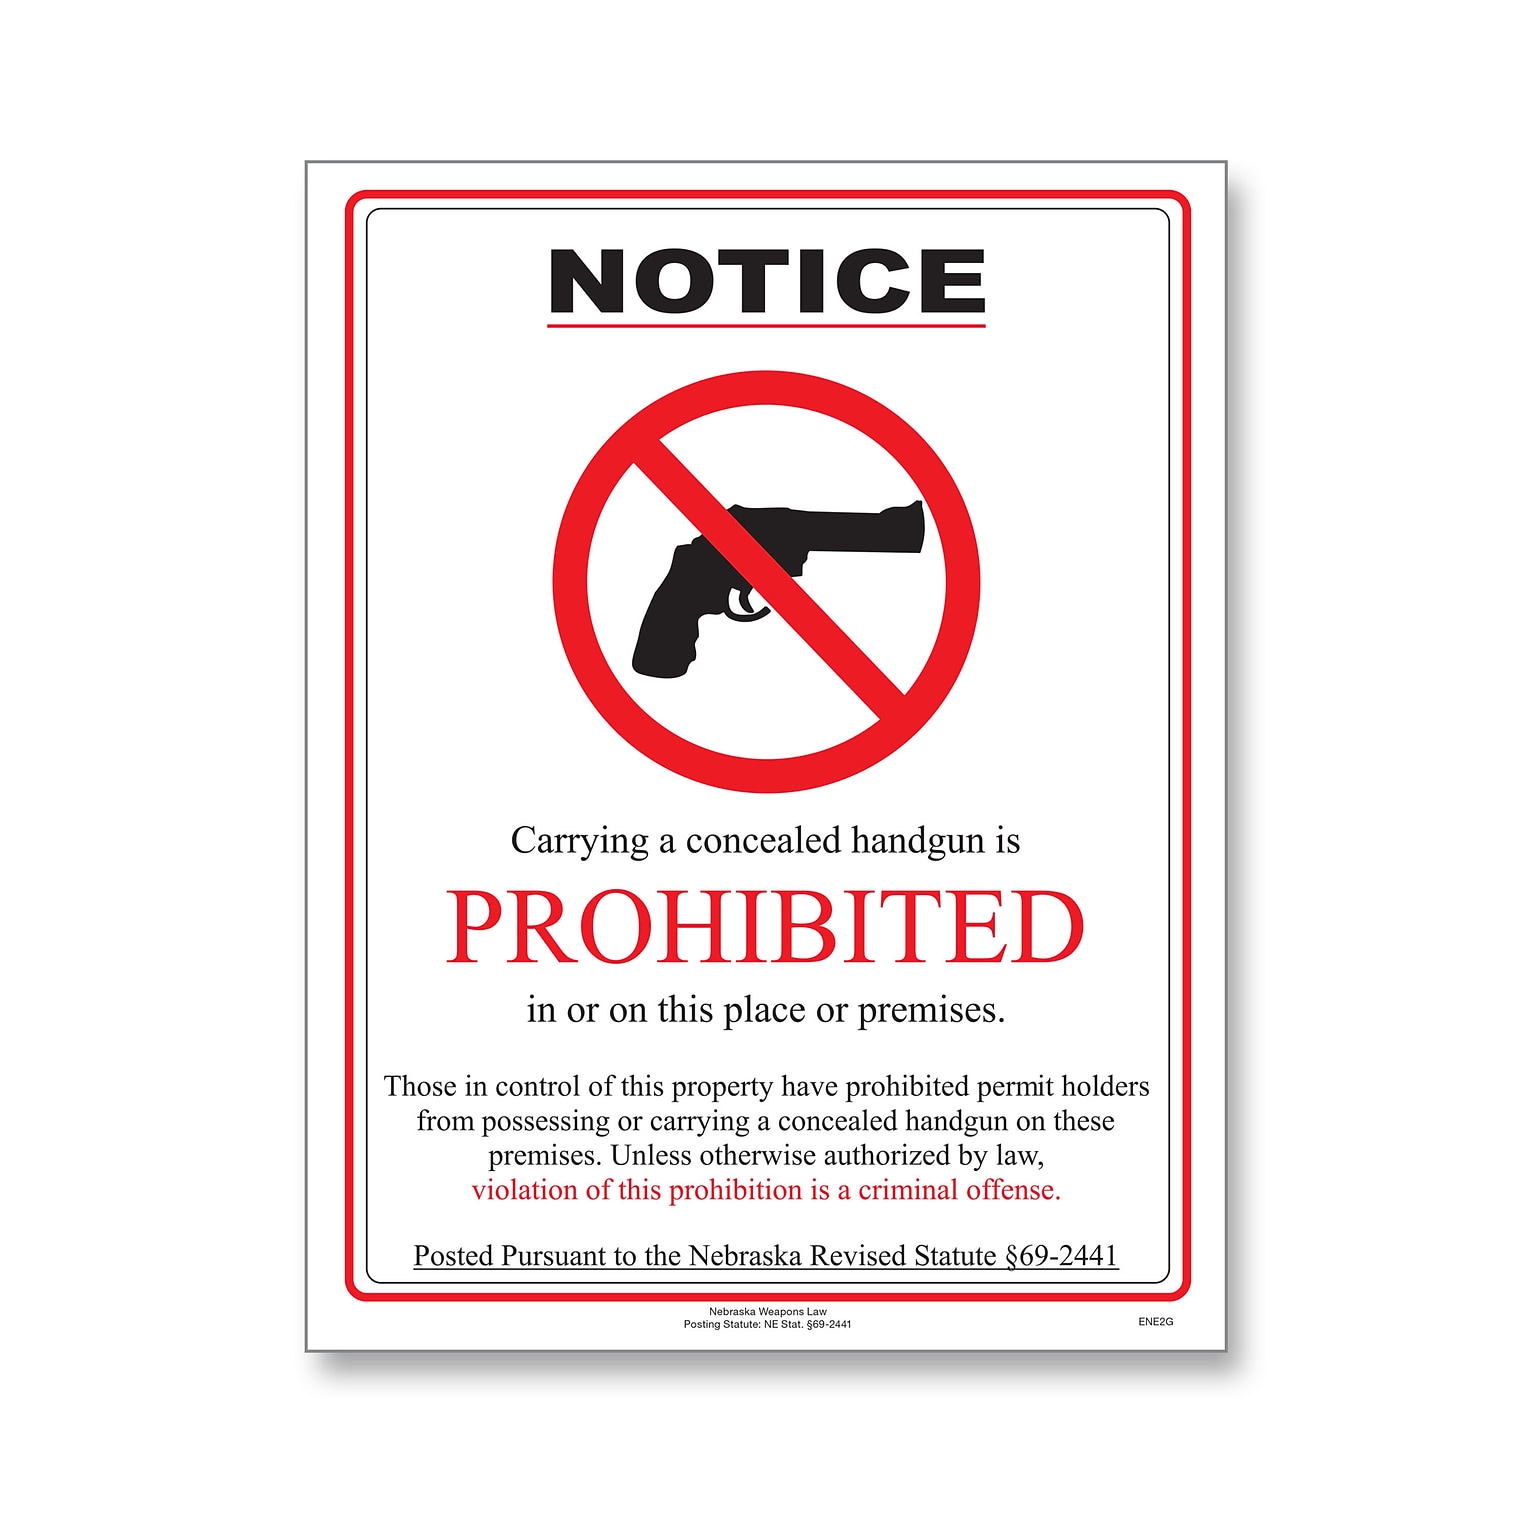 ComplyRight Weapons Law Poster Service, Nebraska (U1200CWPNE)